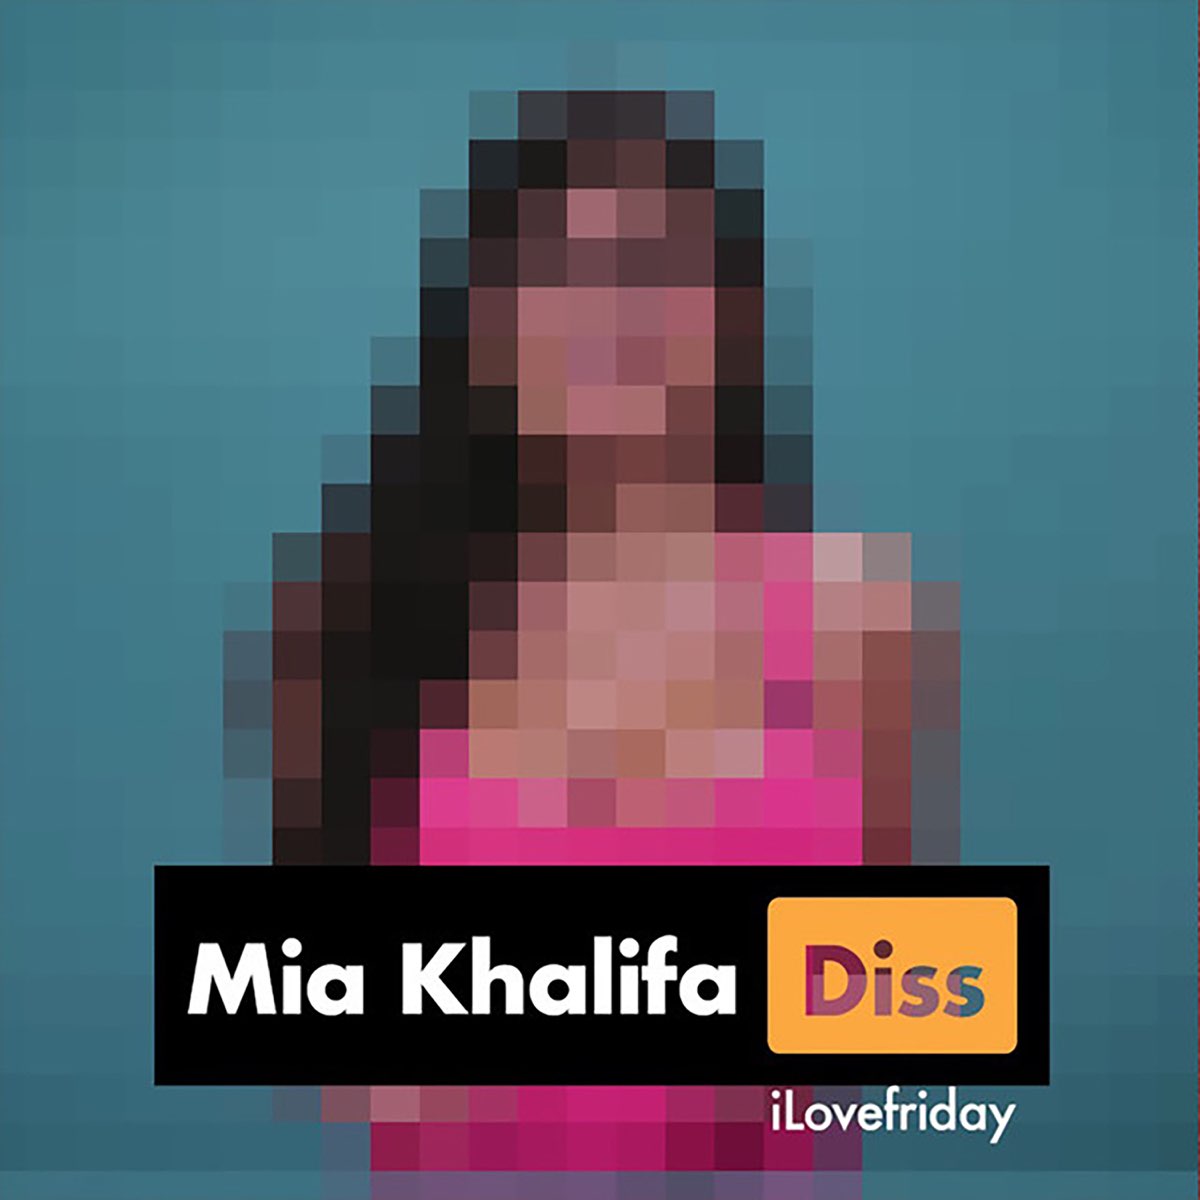 Is mia khalifa single